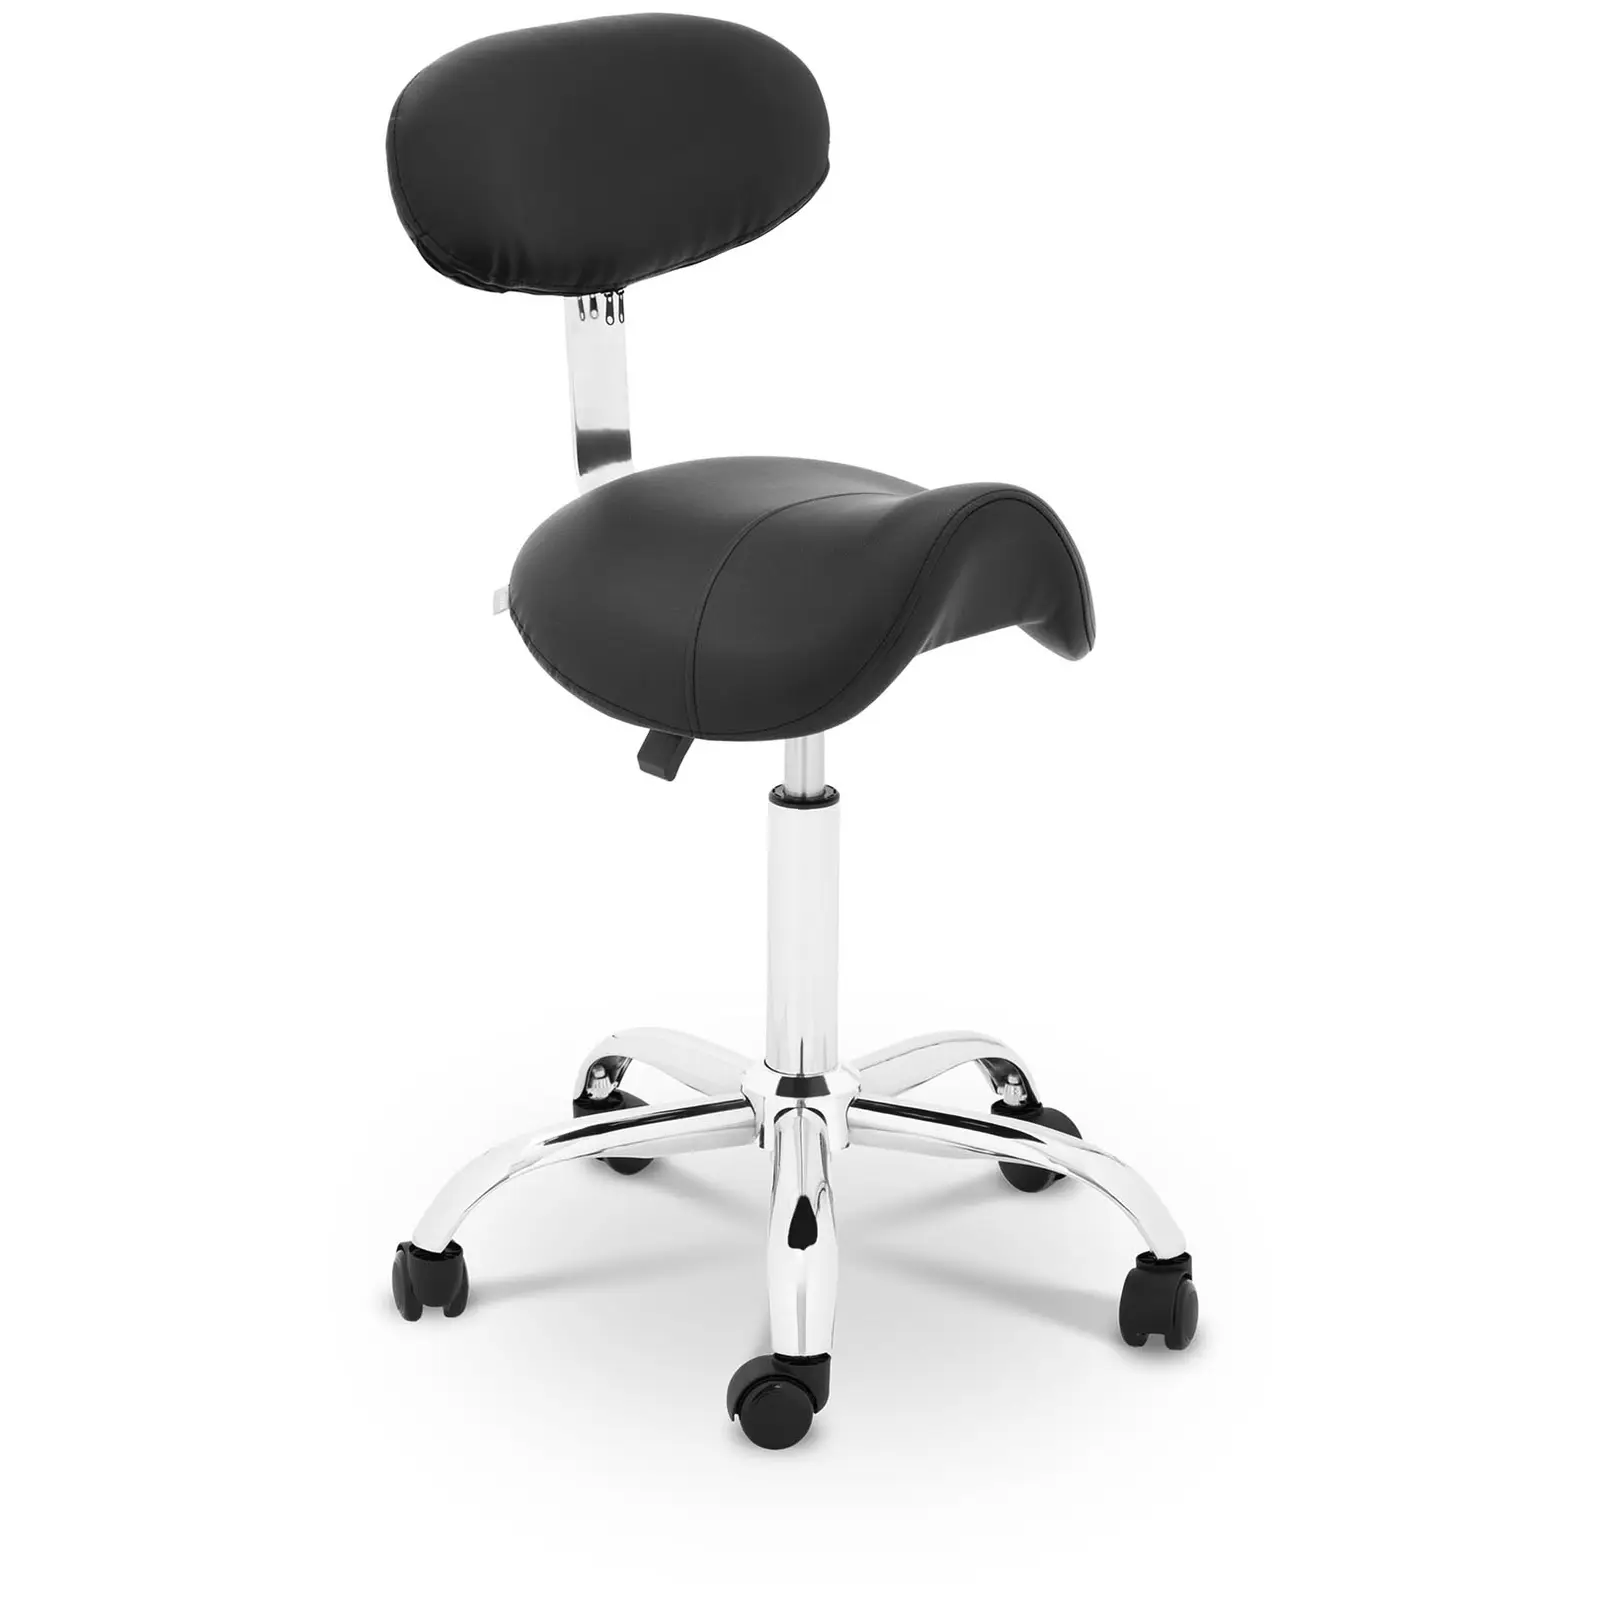 Balno formos kėdė - 530 - 665 mm - 150 kg - juoda